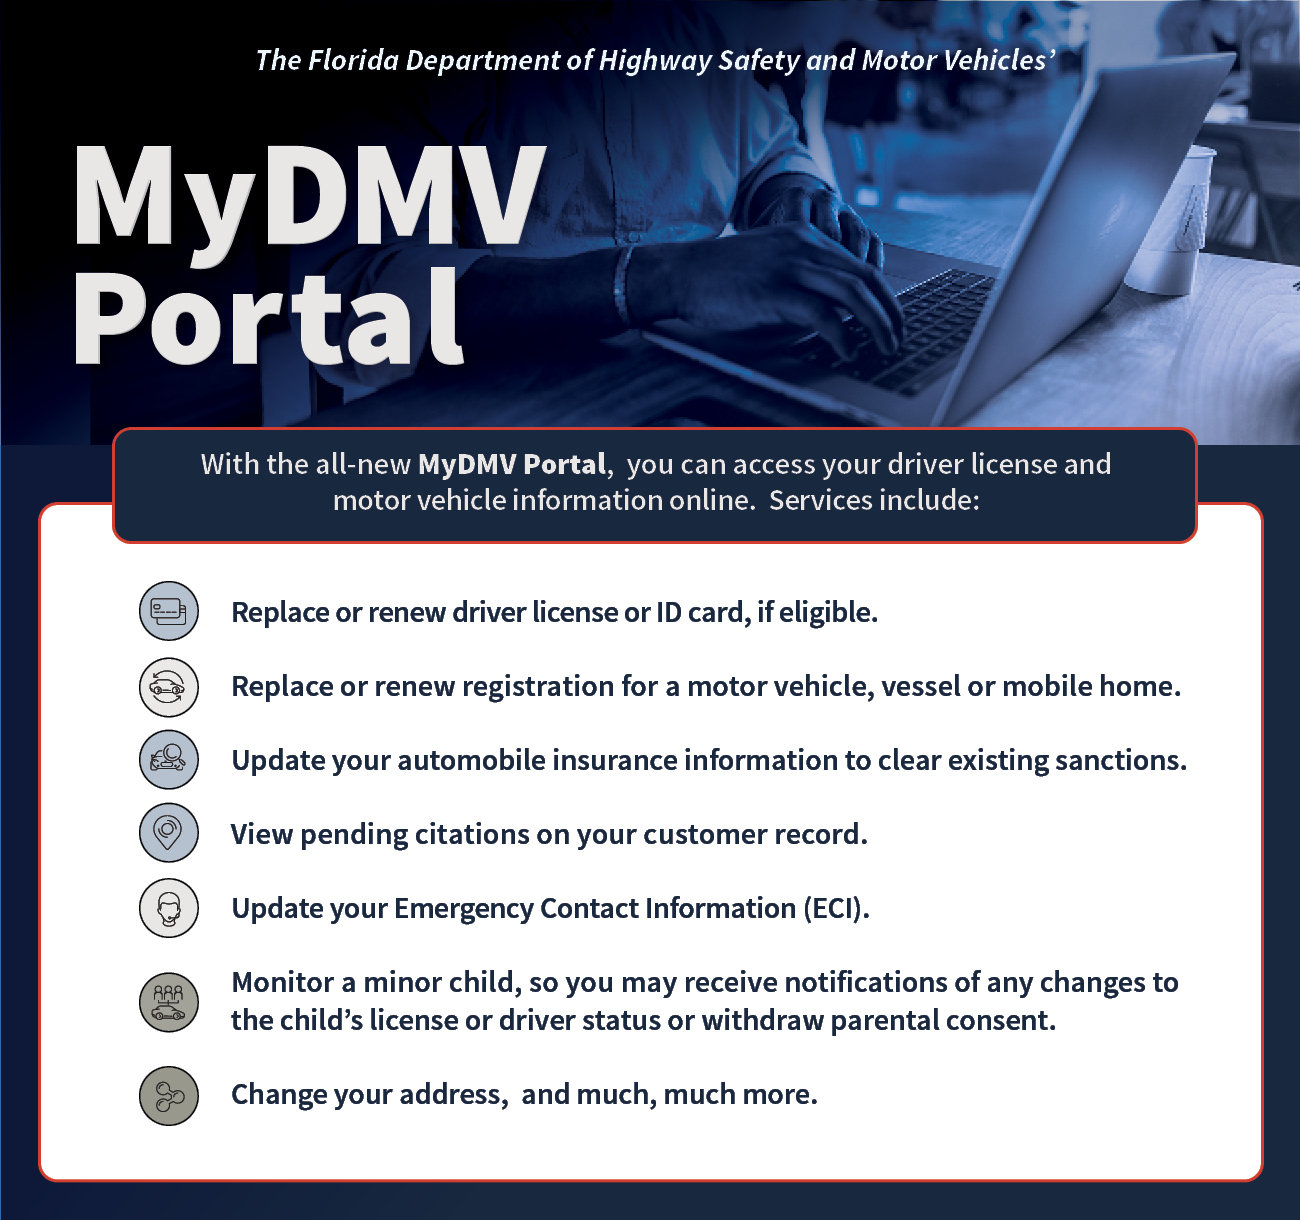 Visit MyDMVPortal